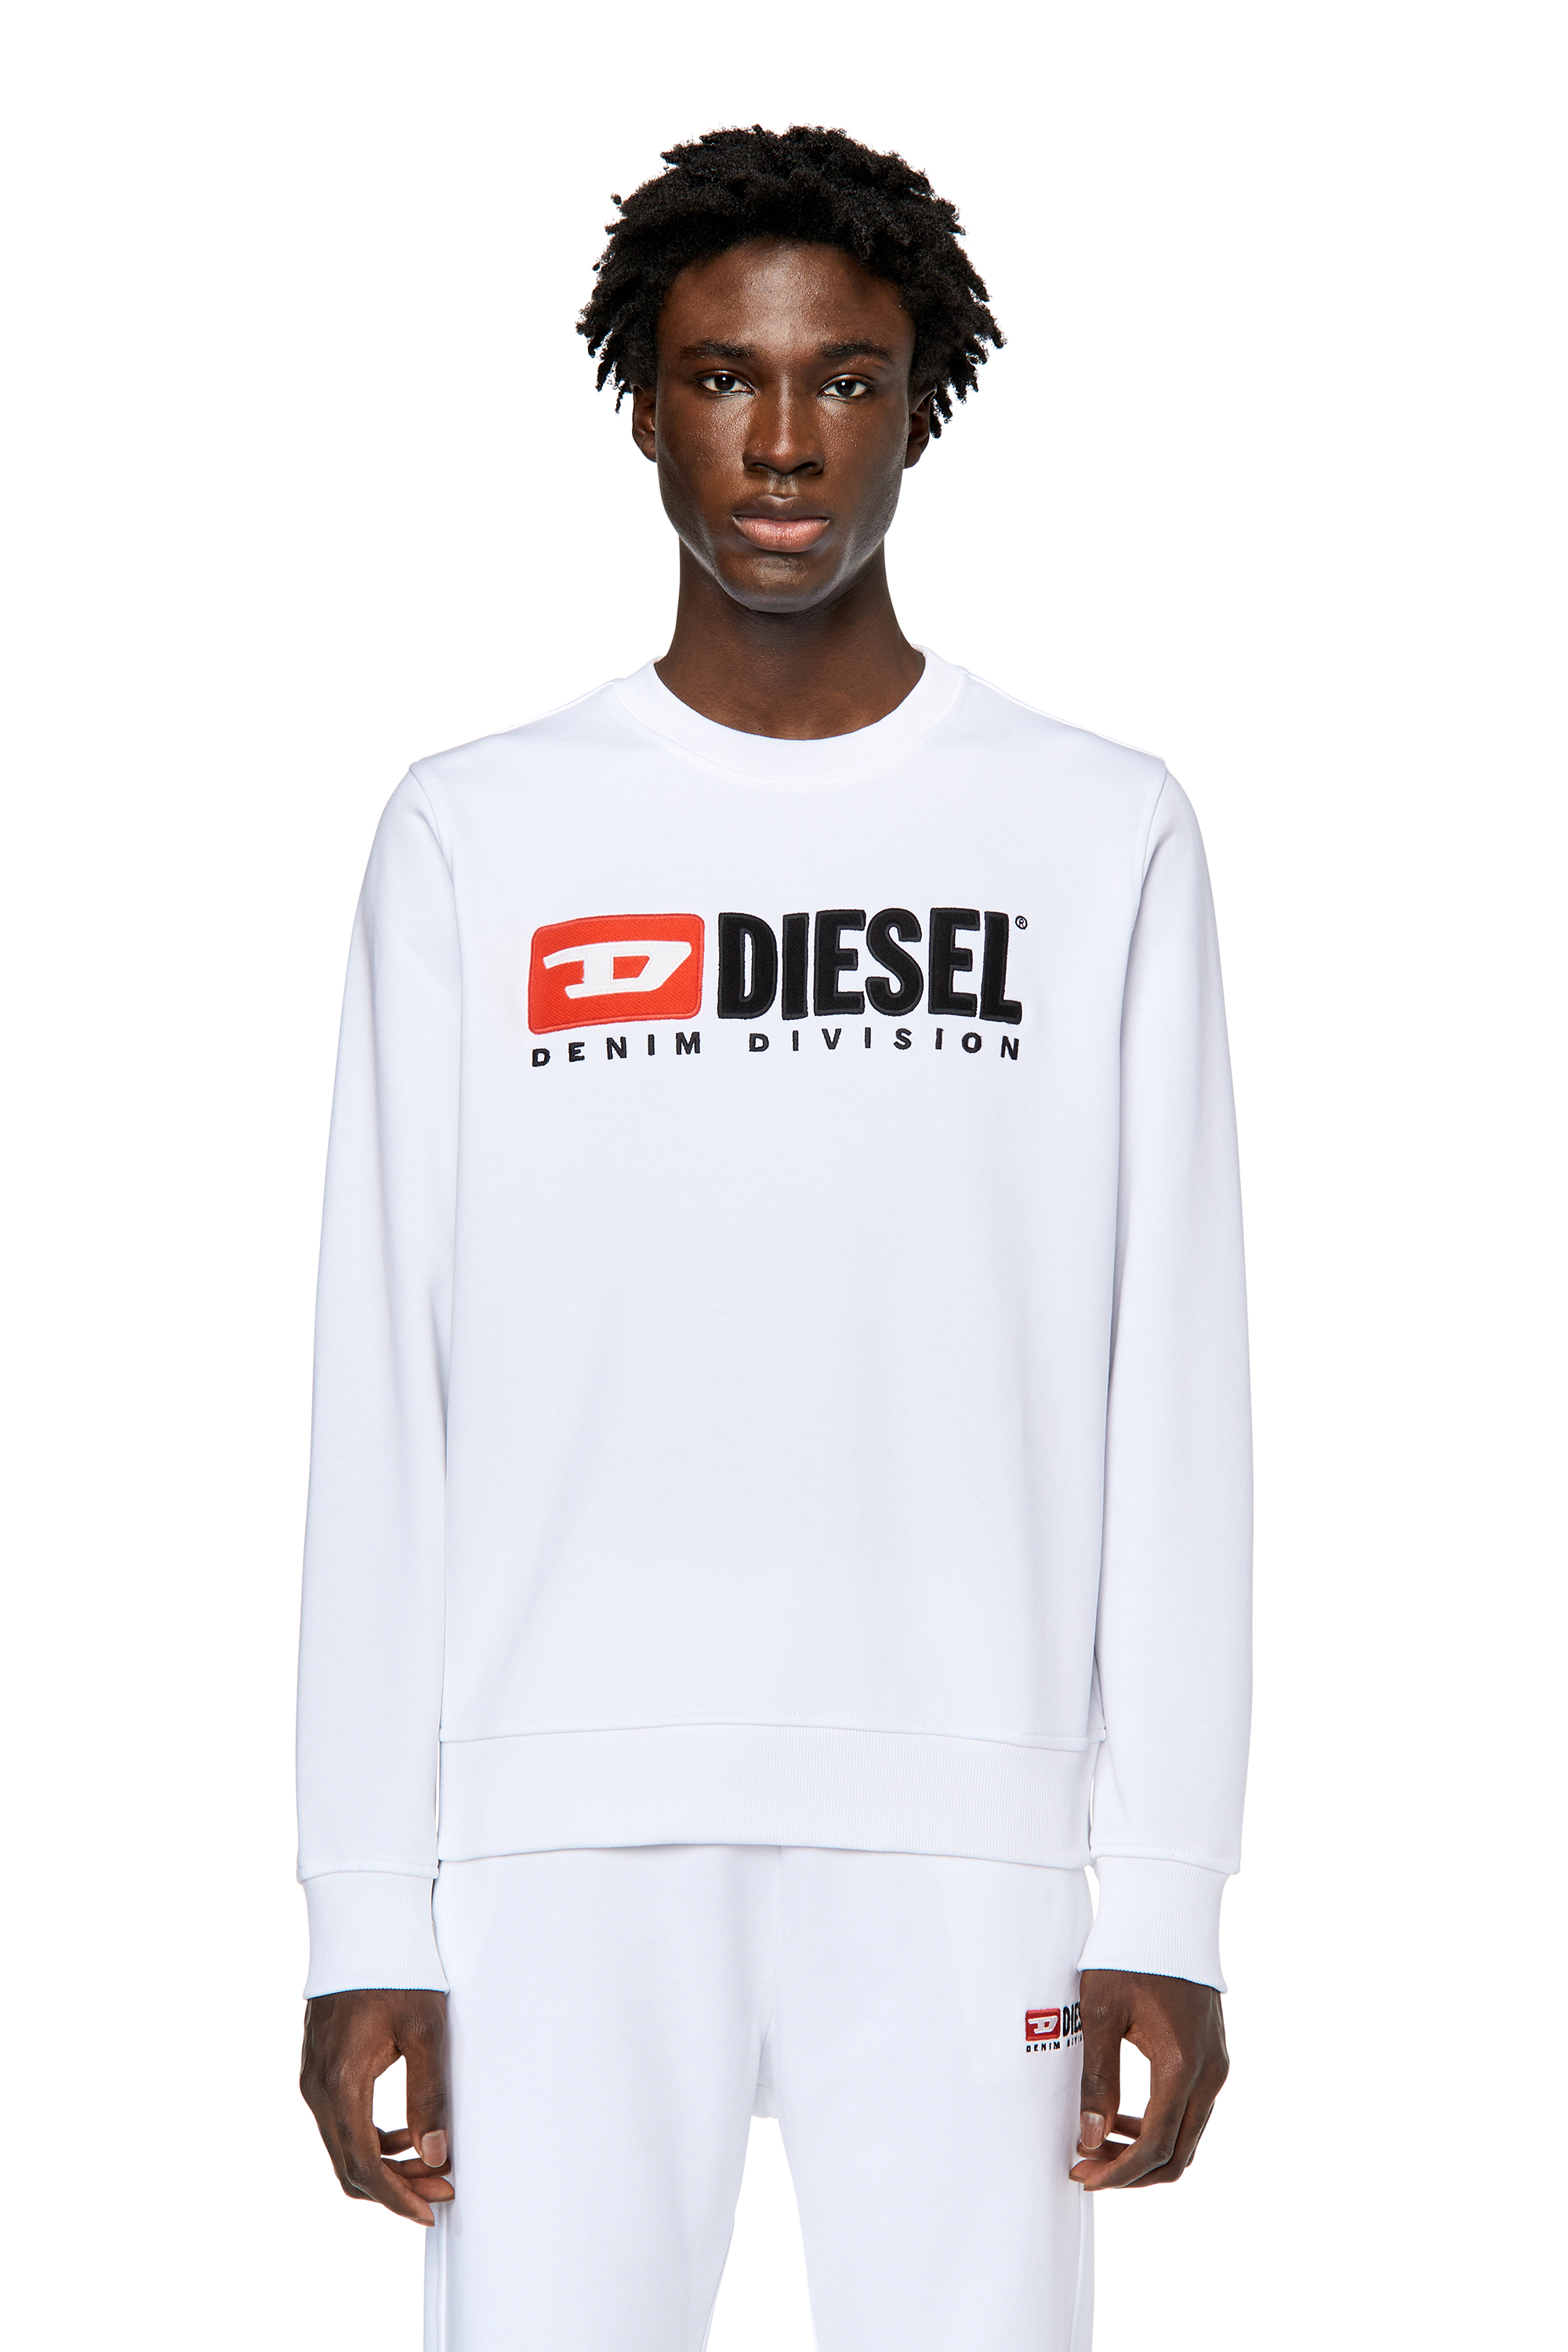 Diesel - S-GINN-DIV, White - Image 1